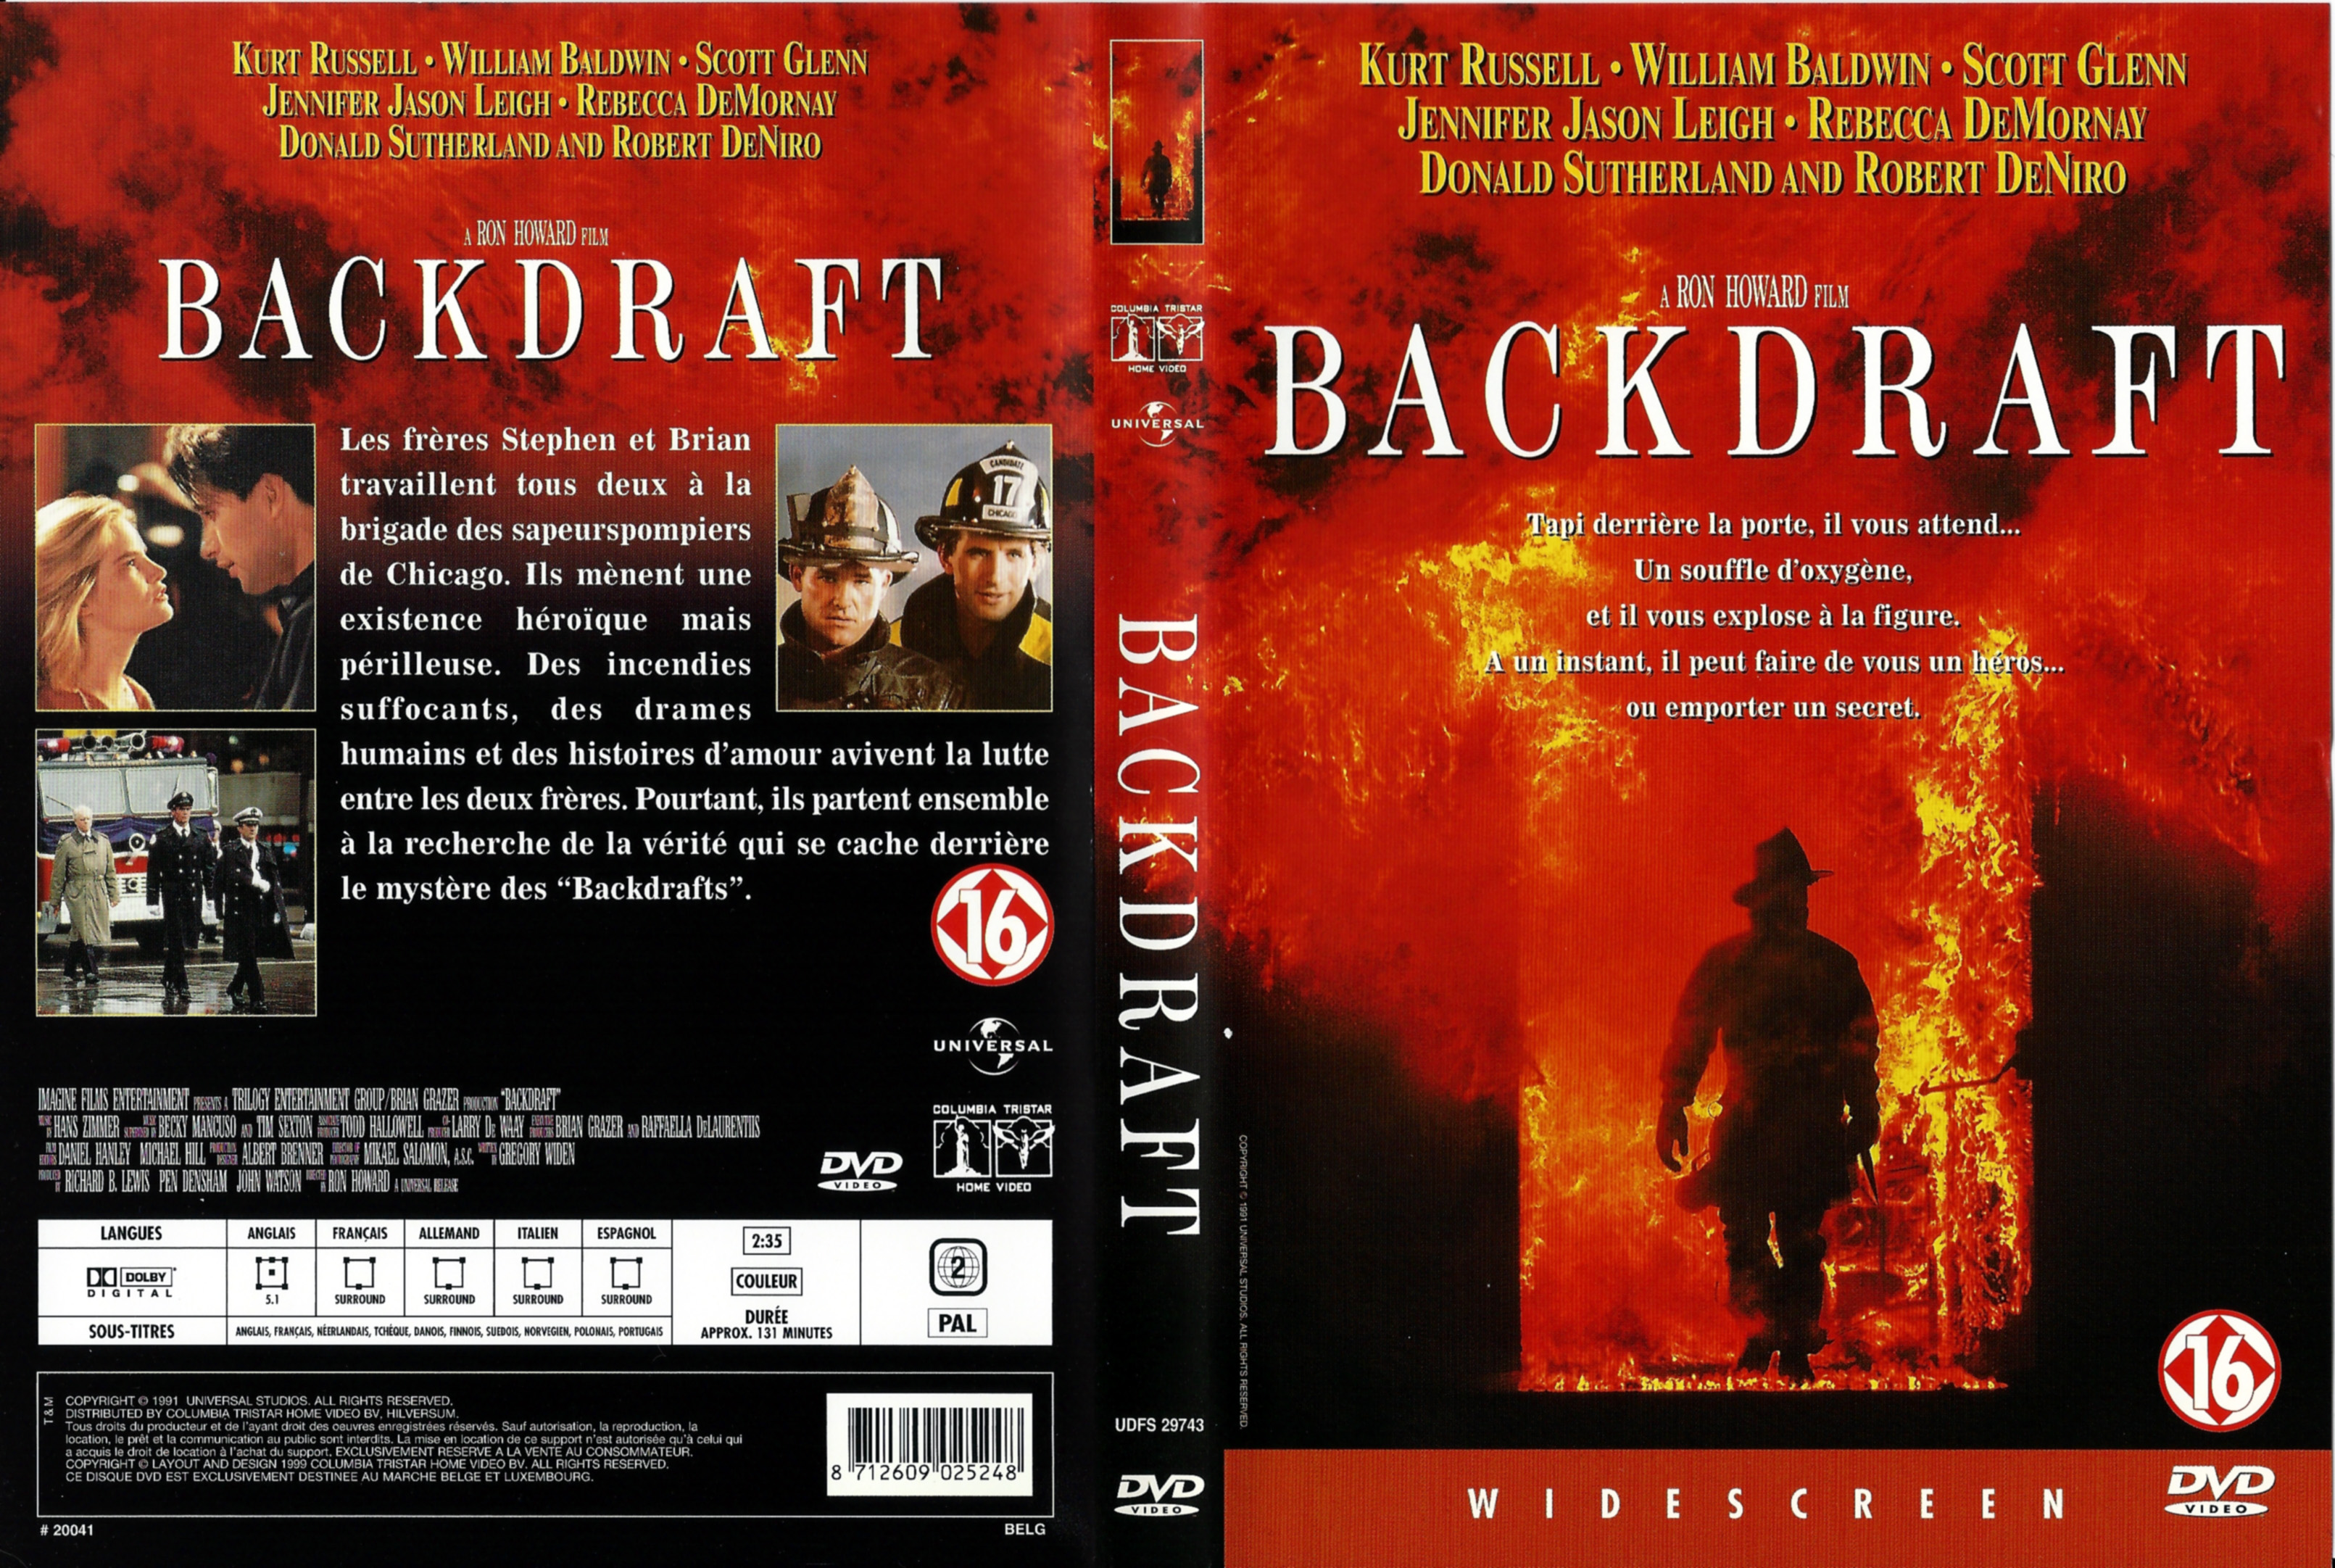 Jaquette DVD Backdraft v3